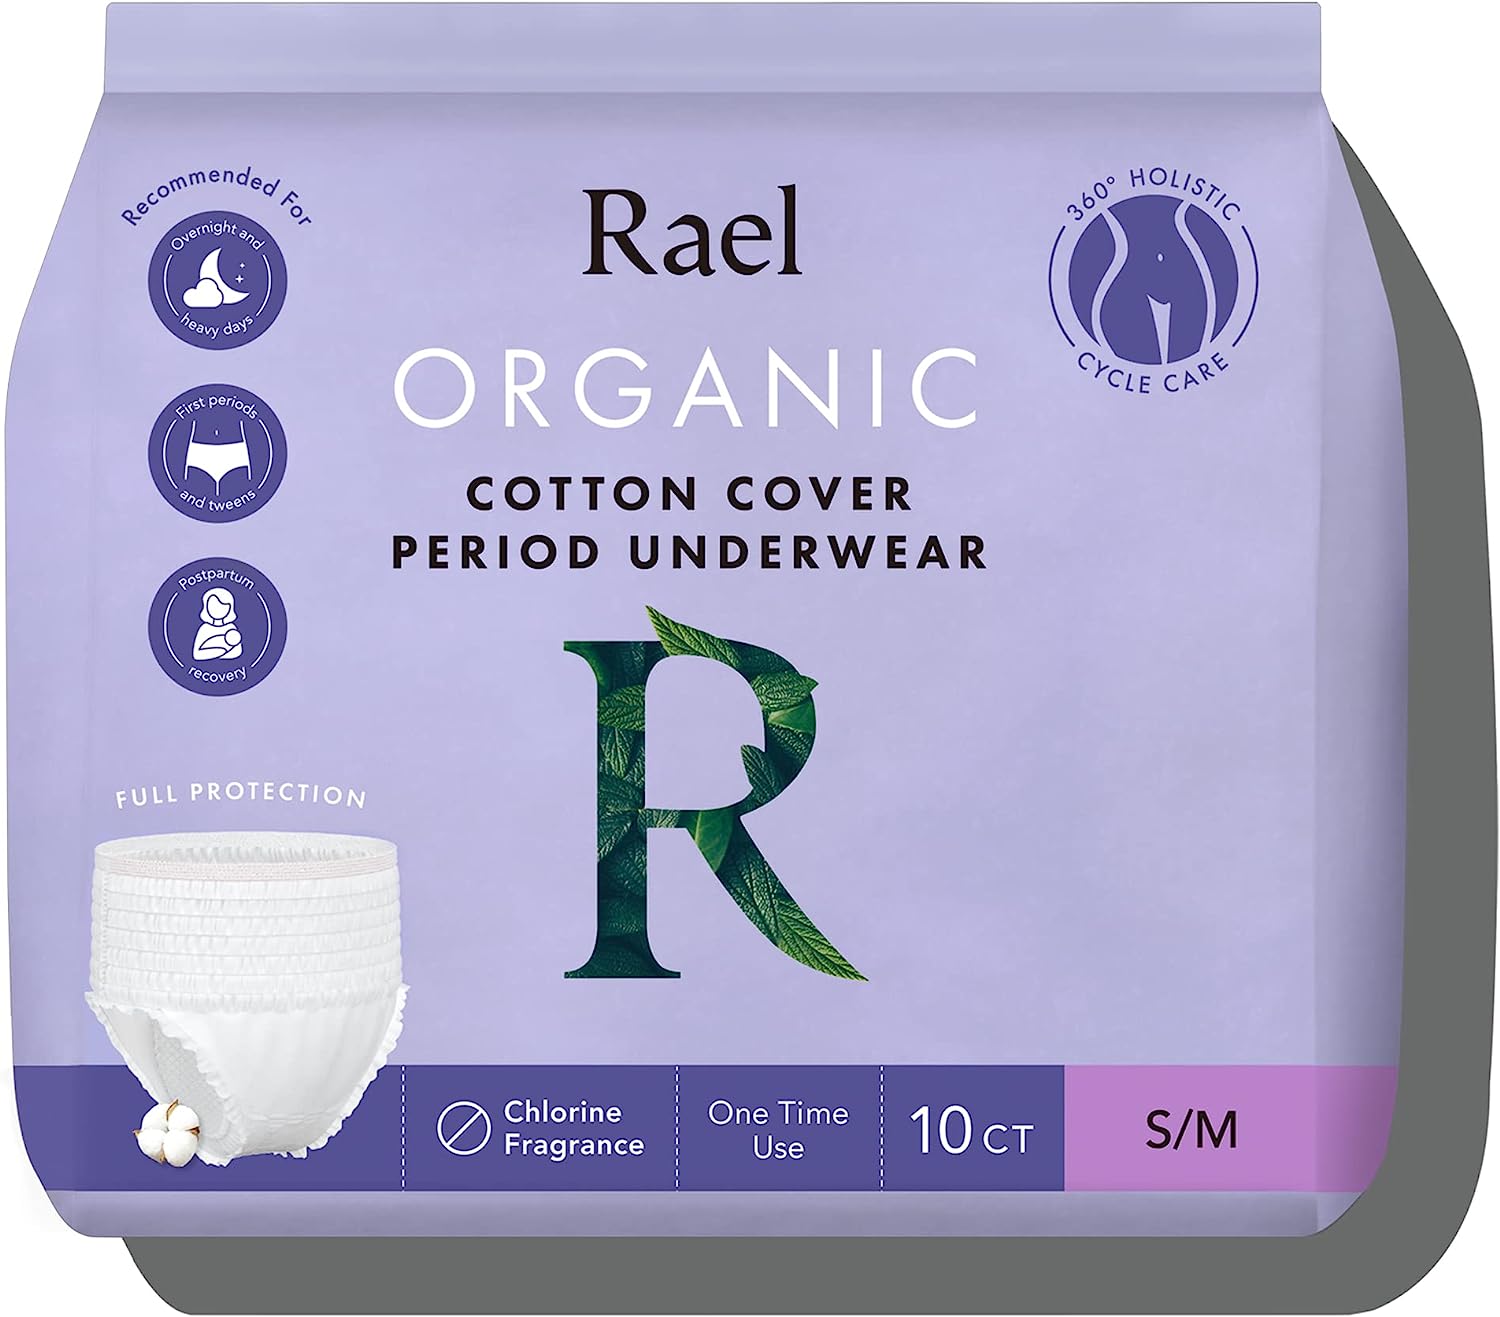 Real organic cotton cover period underwear